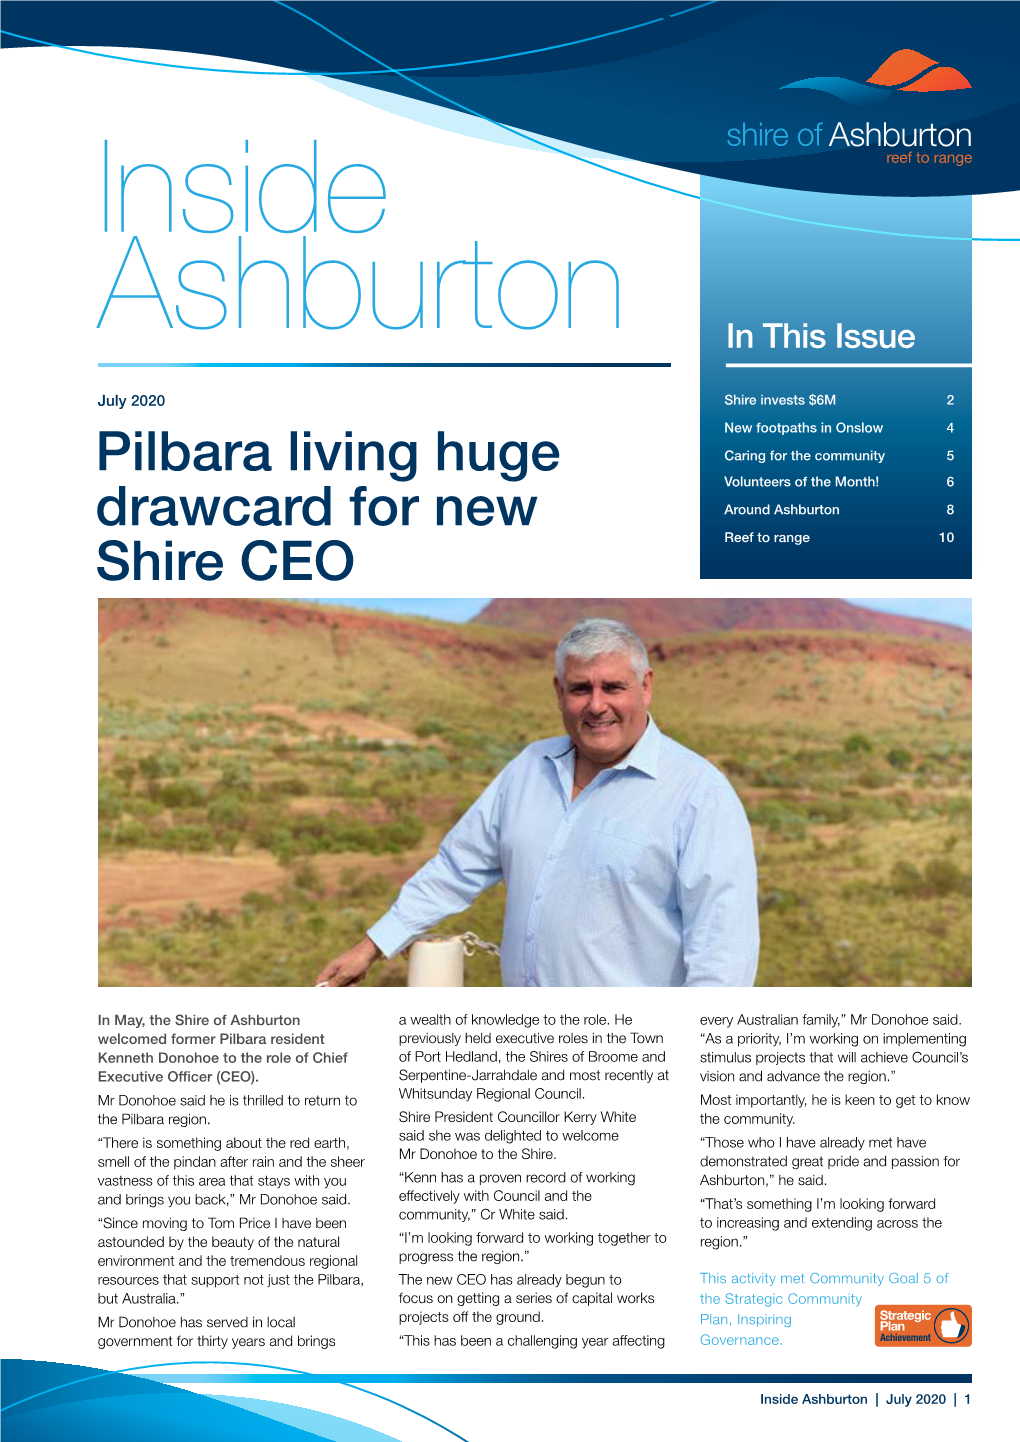 Pilbara Living Huge Drawcard for New Shire